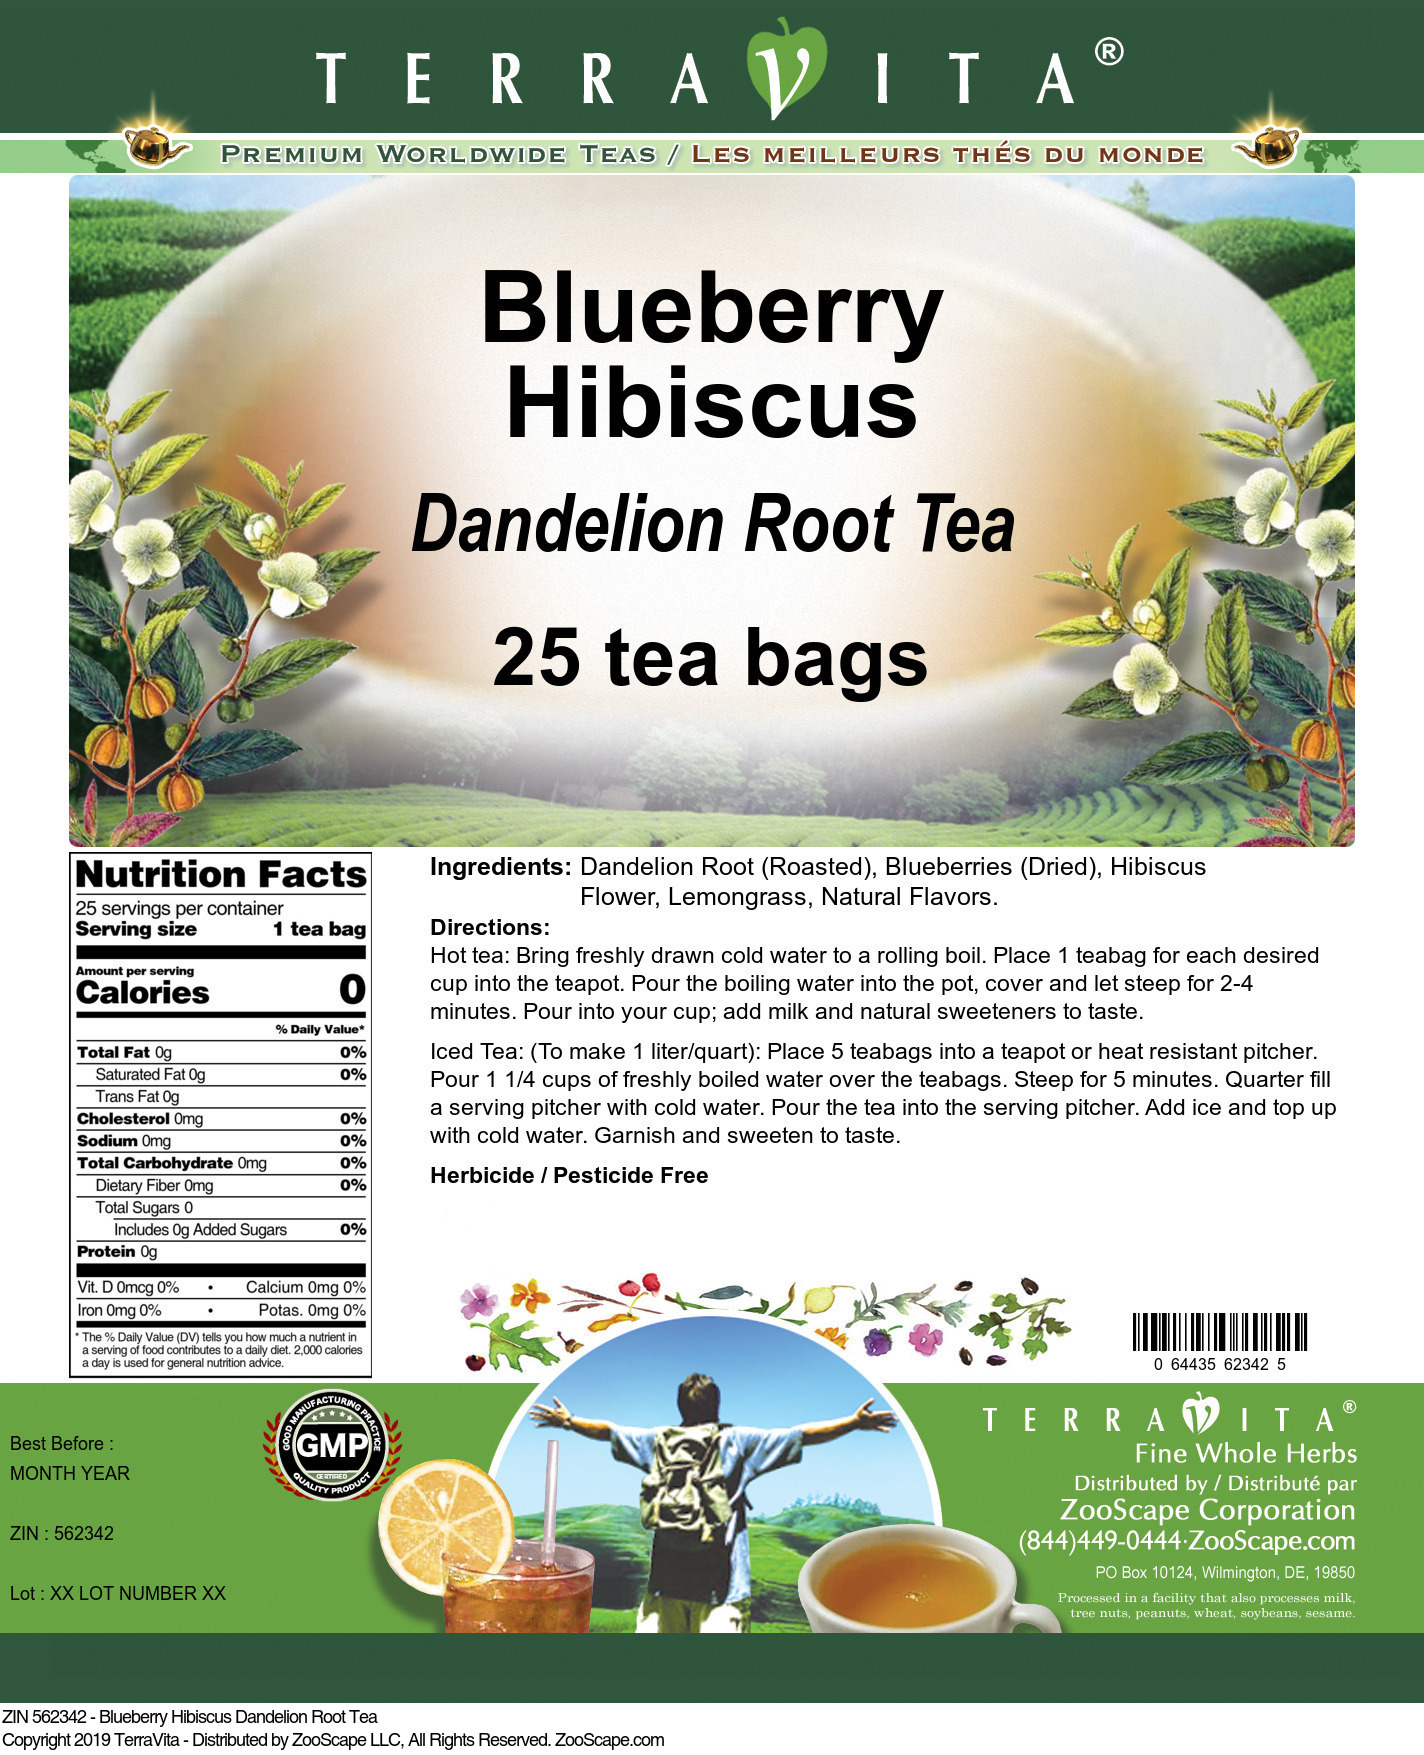 Blueberry Hibiscus Dandelion Root Tea - Label